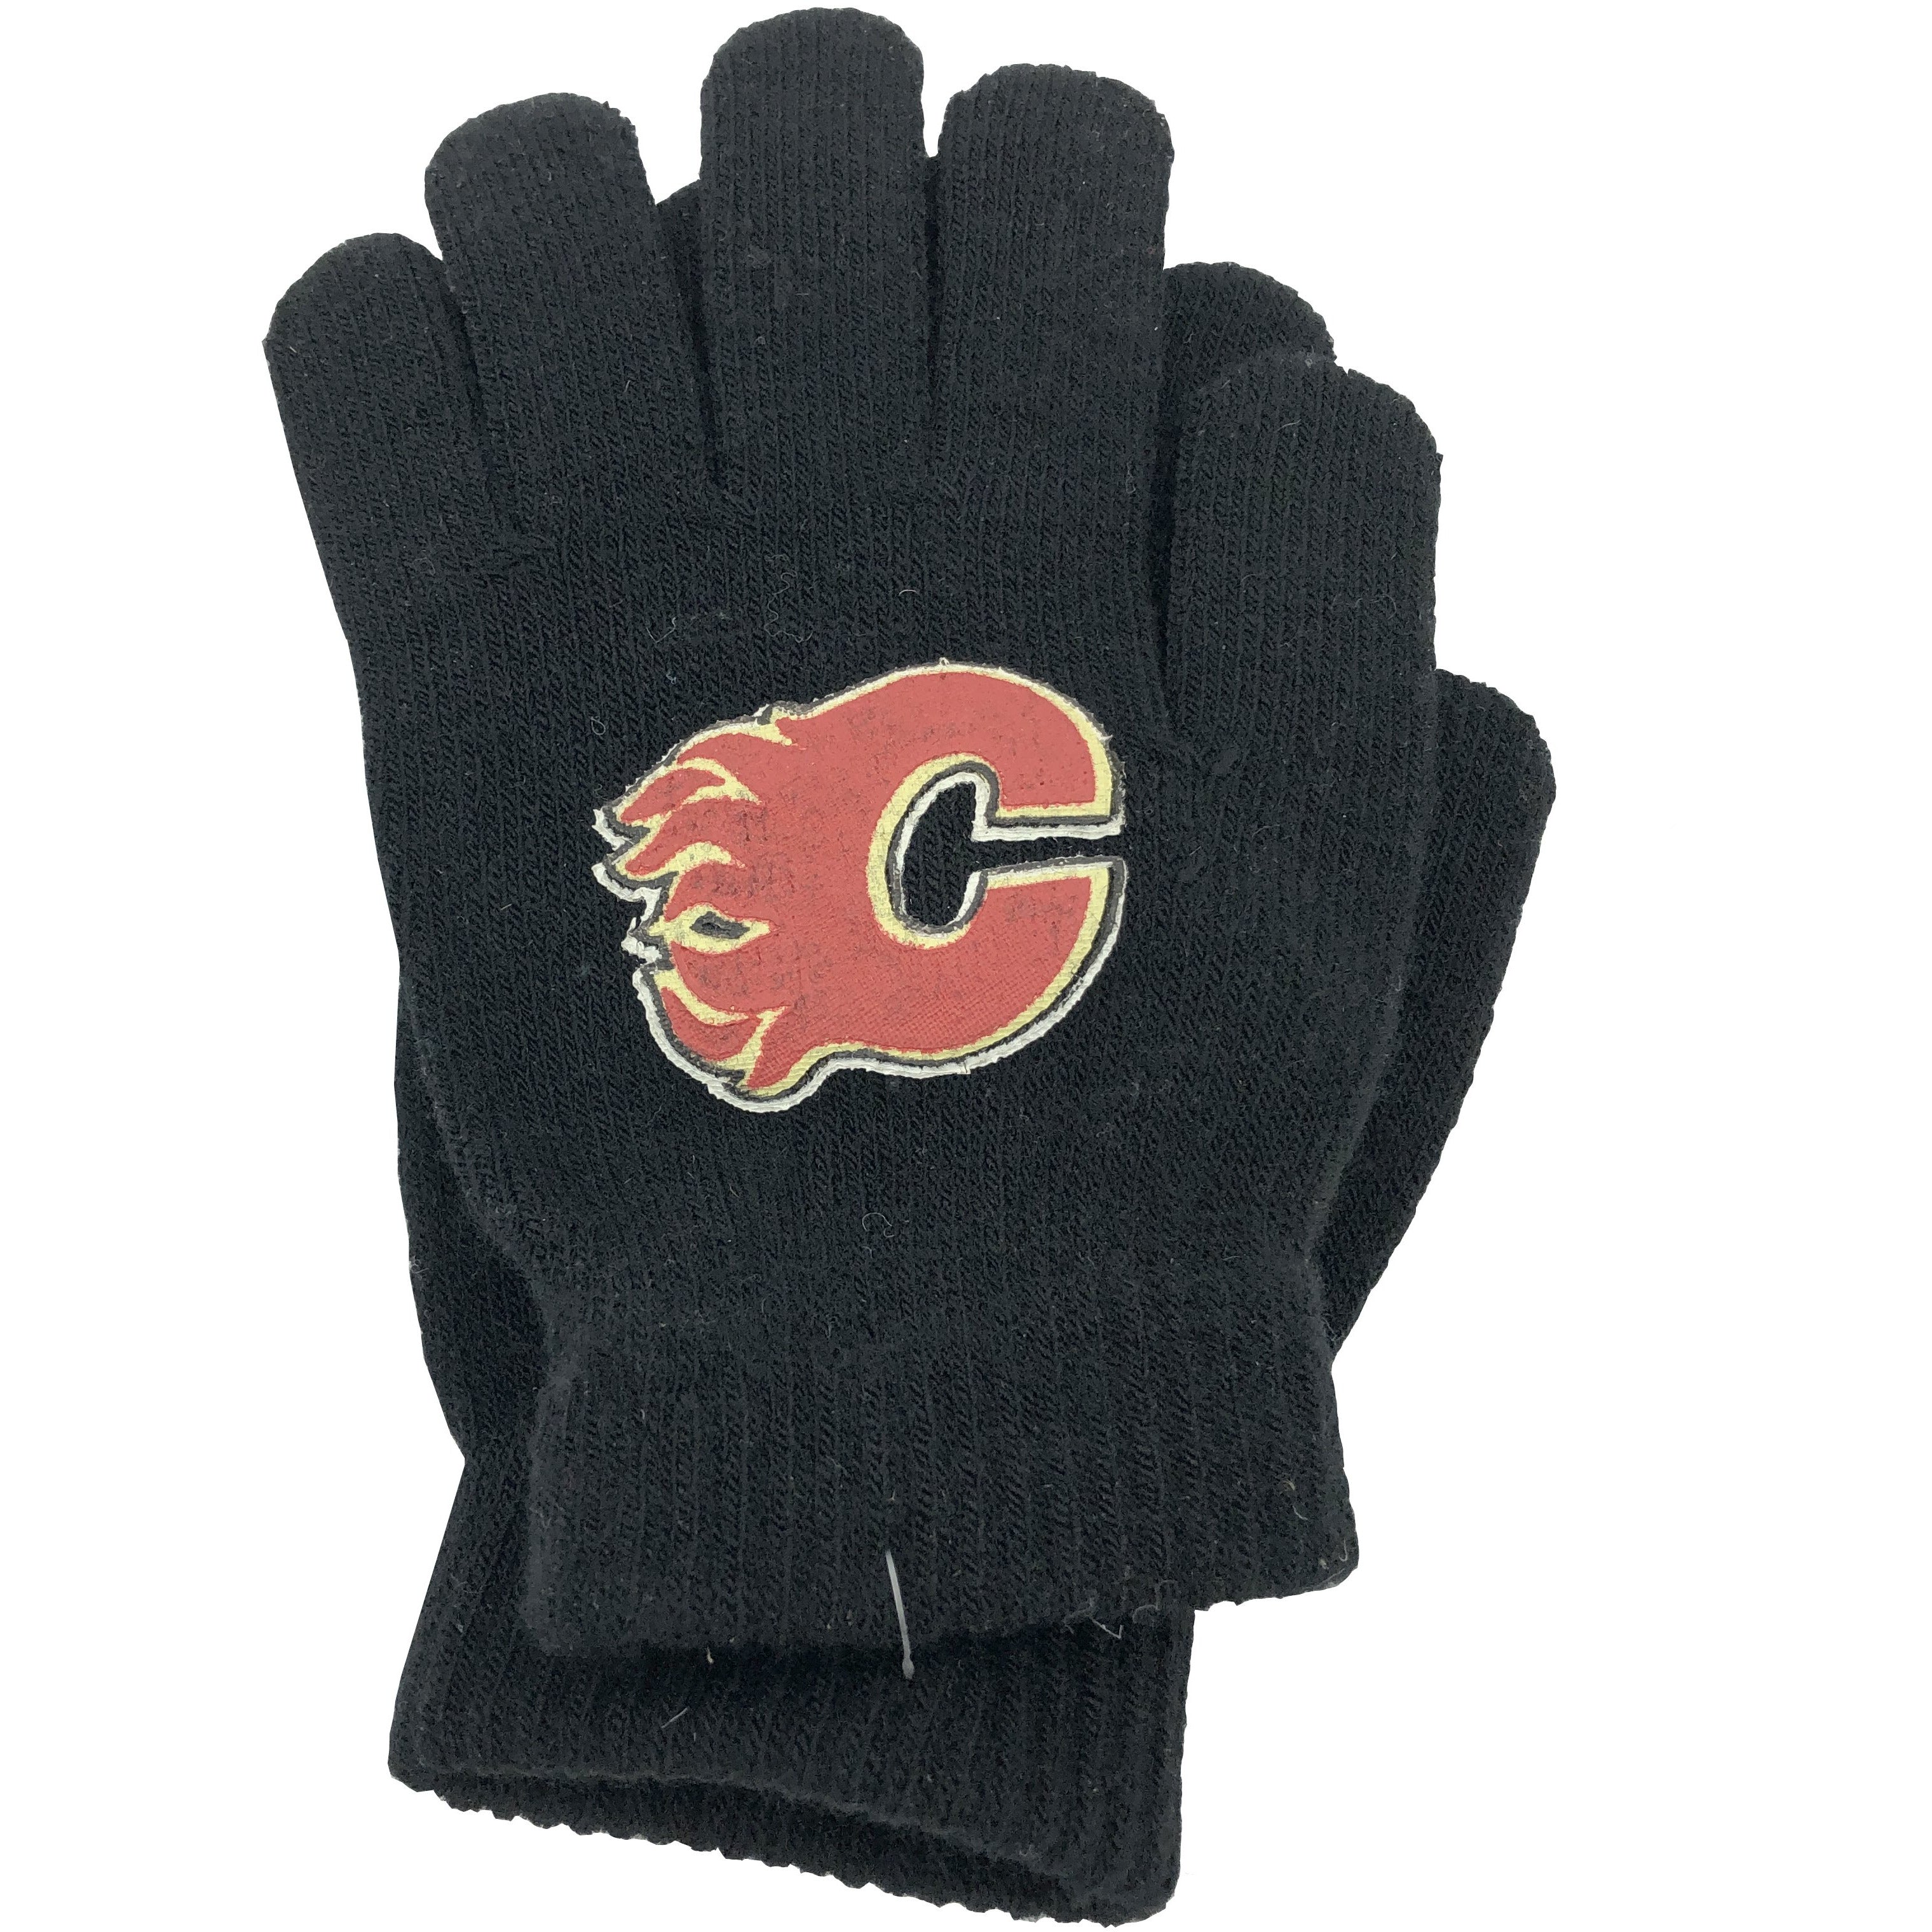 NHL Children's Winter Gloves / Official NHL Team Logo / One Size Fits Most / Black